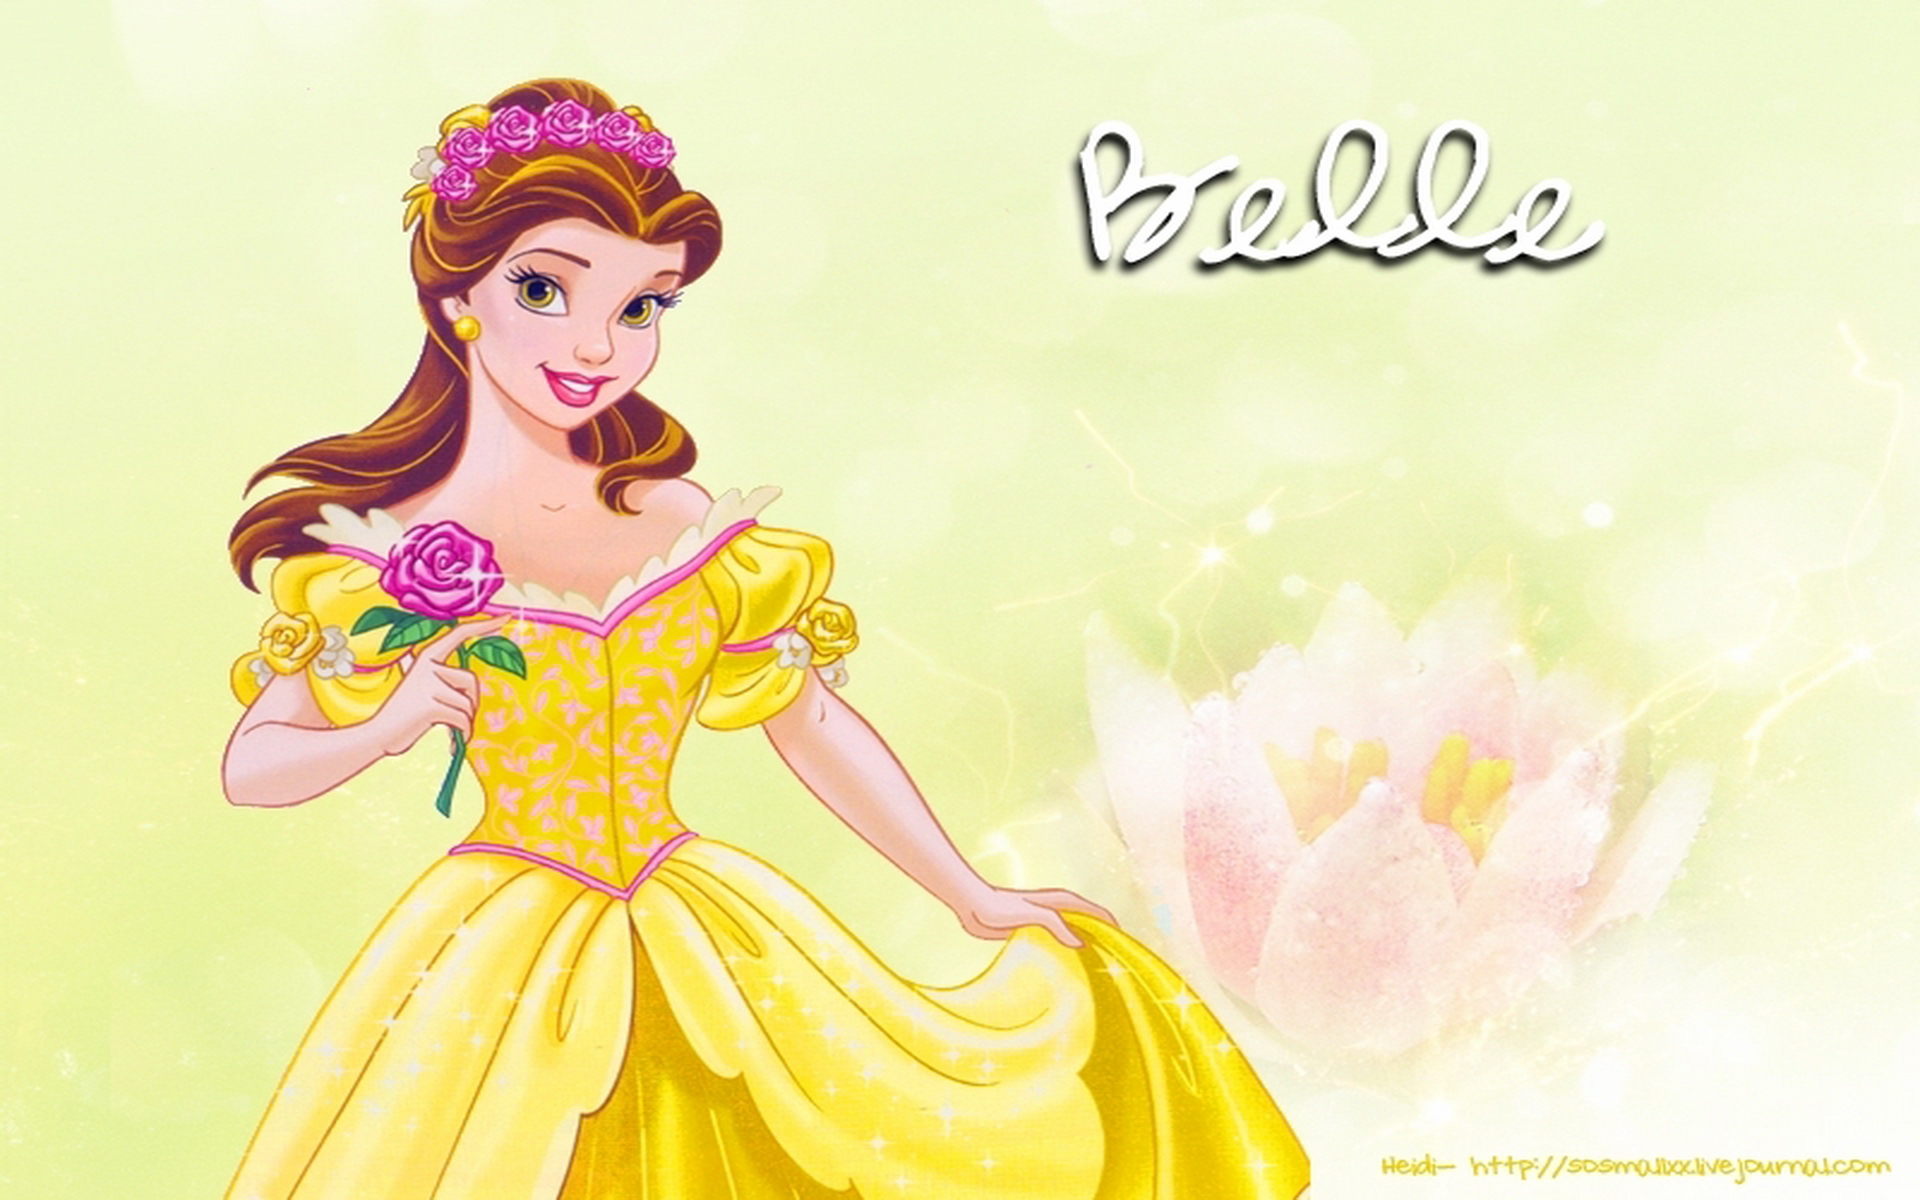 Princess Belle - Disney Princess Wallpaper (36193552) - Fanpop